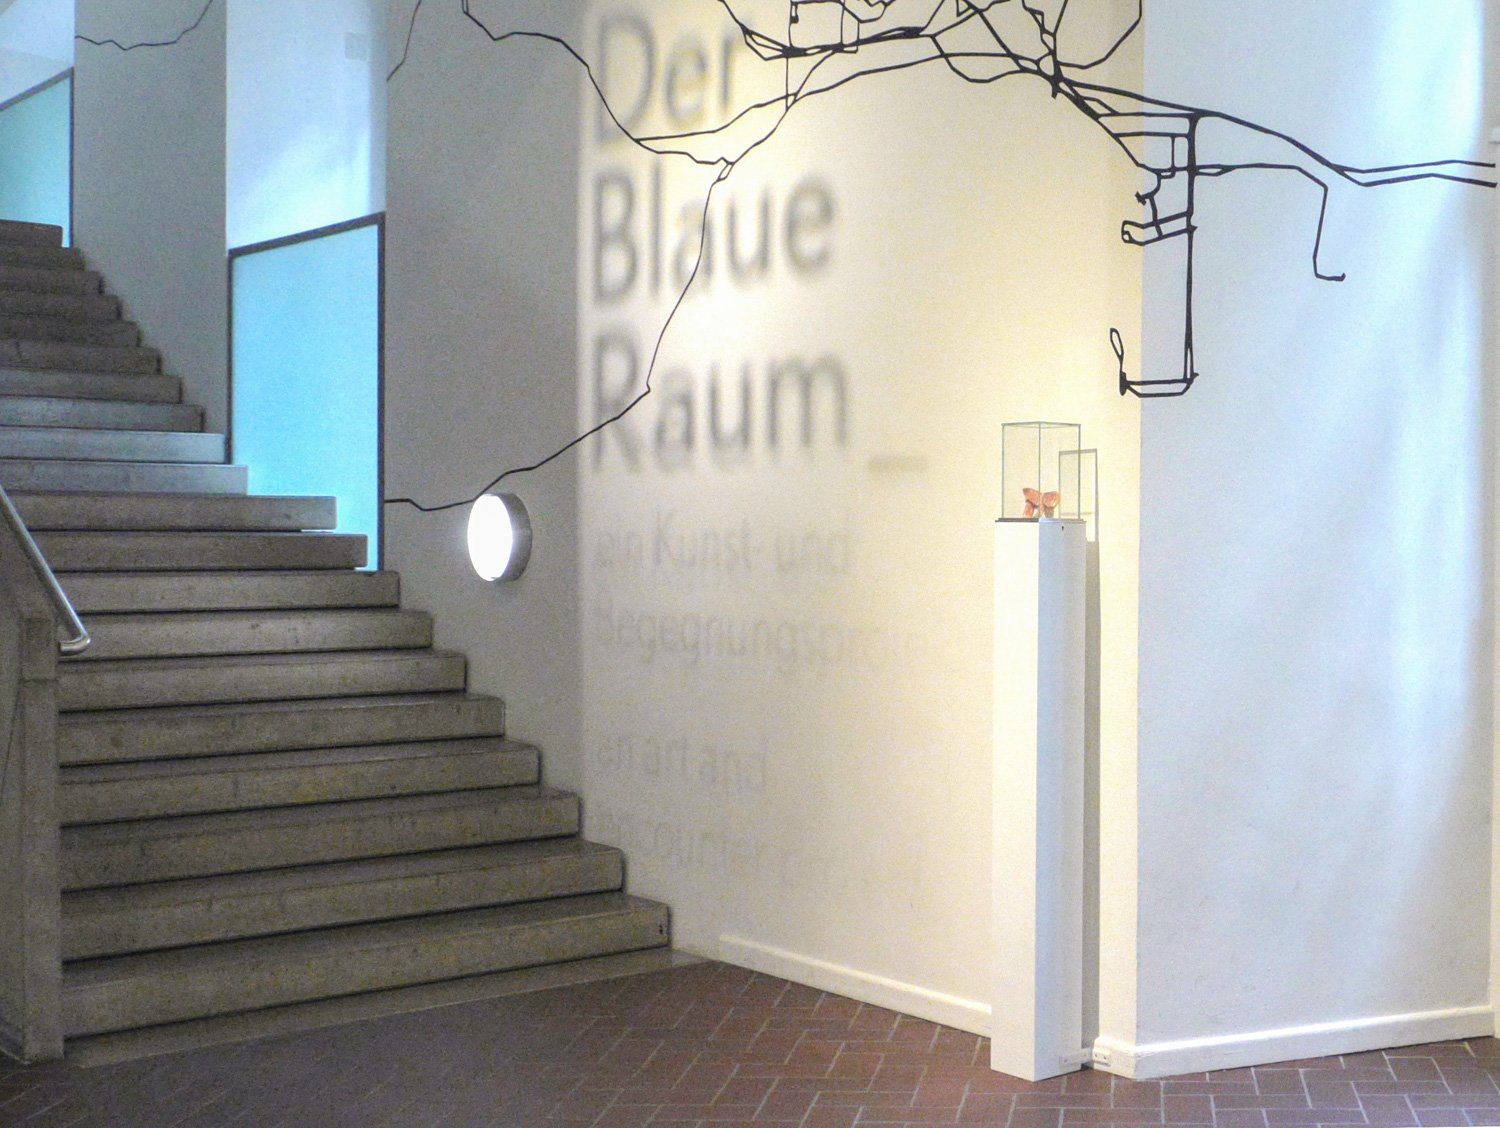 Installation View The Blue Room, Jewish Museum Berlin, 2017 